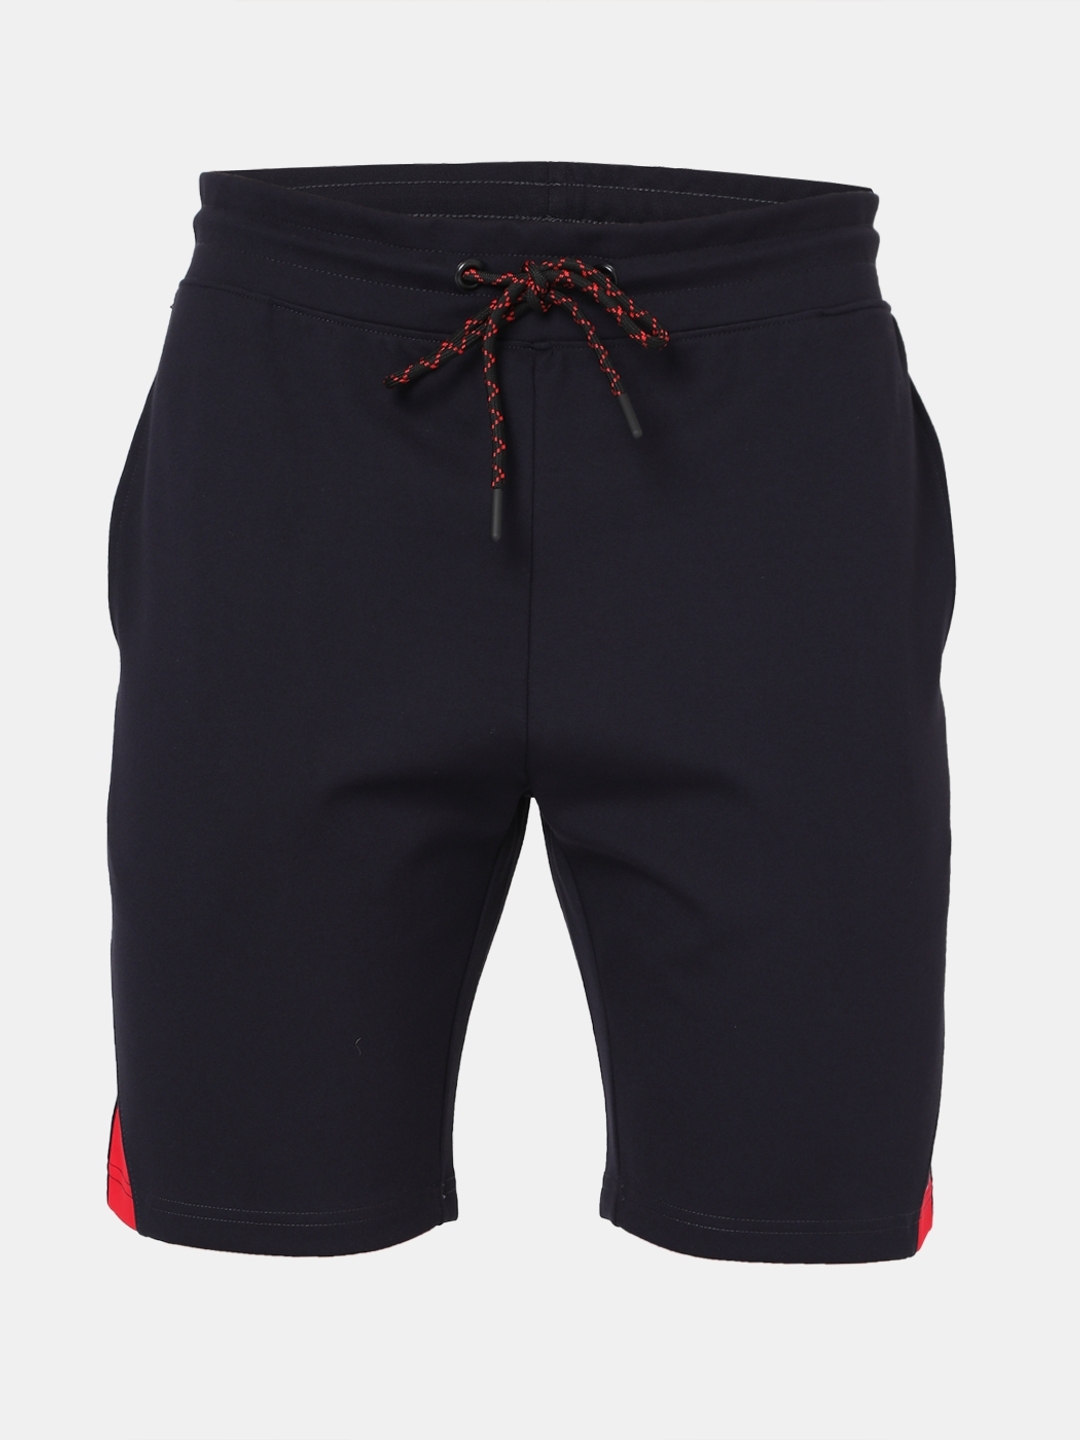 Men's Scott Sew In Slim Fit Shorts